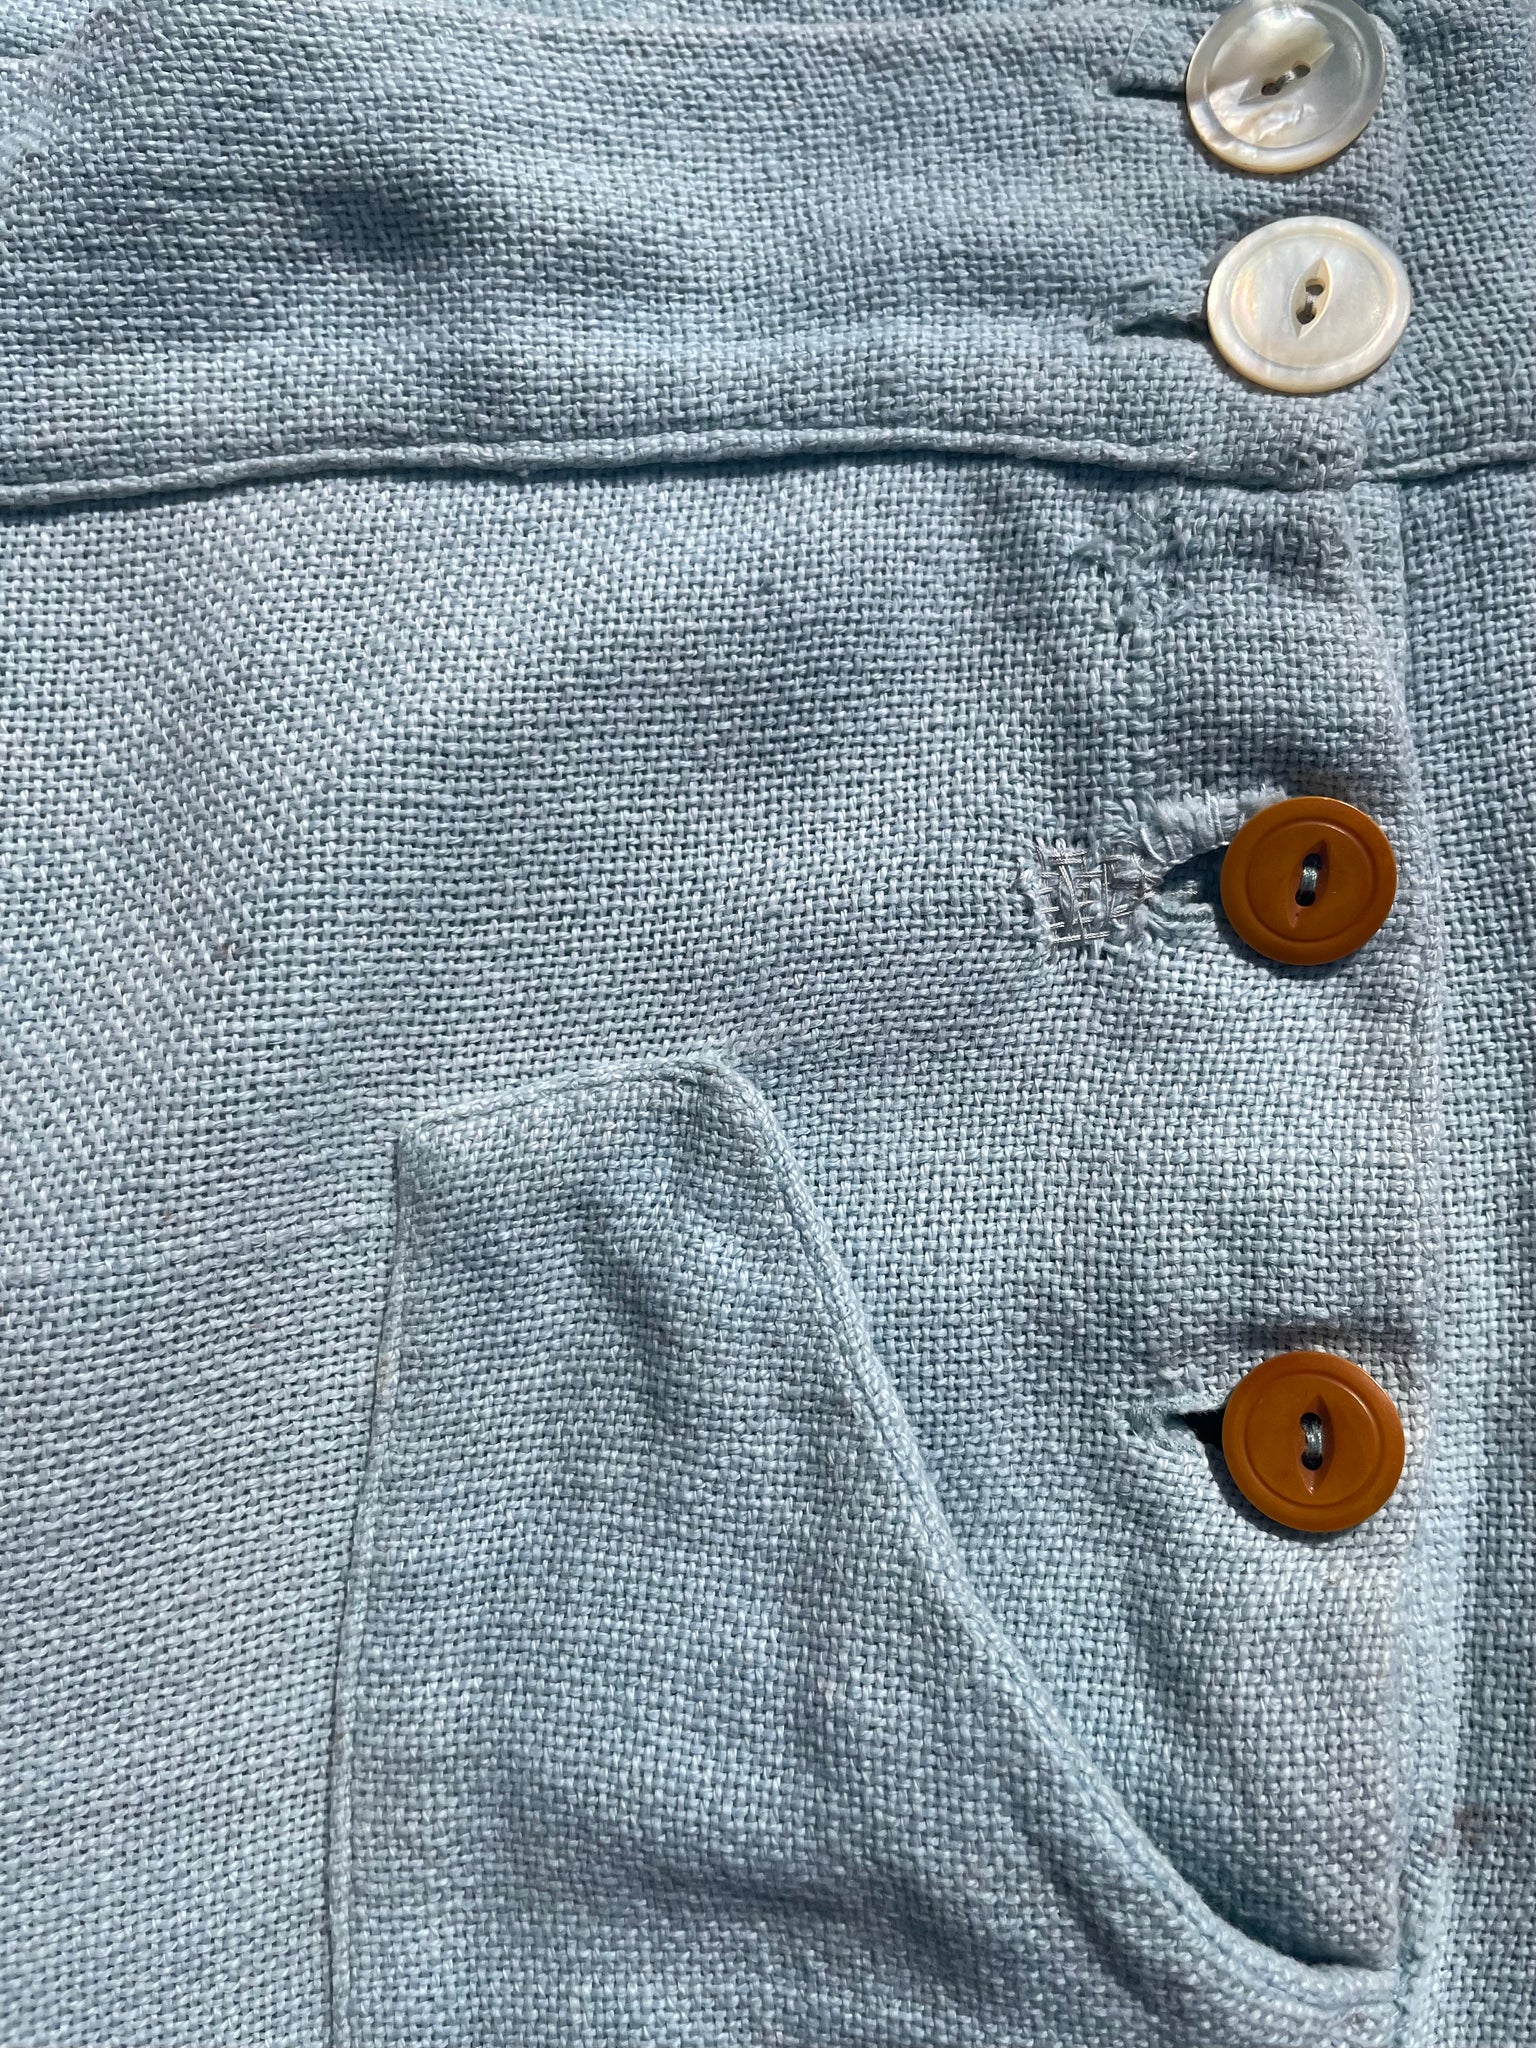 Rare 1930s Cornflower Blue Fall Front Linen Pants